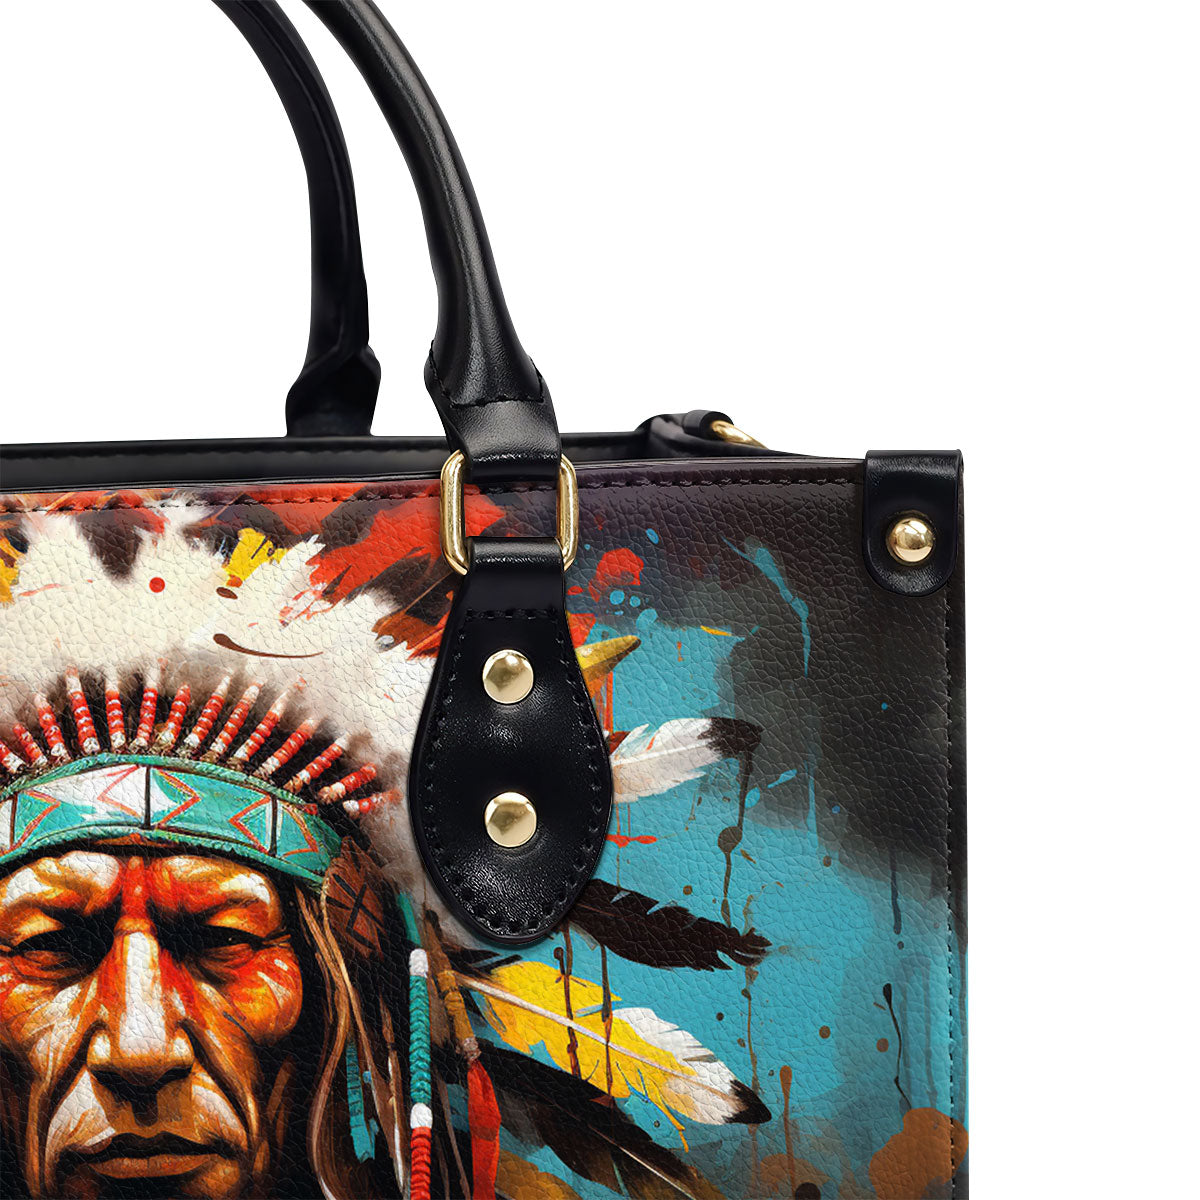 Native American Art - Personalized Leather Handbag MS113